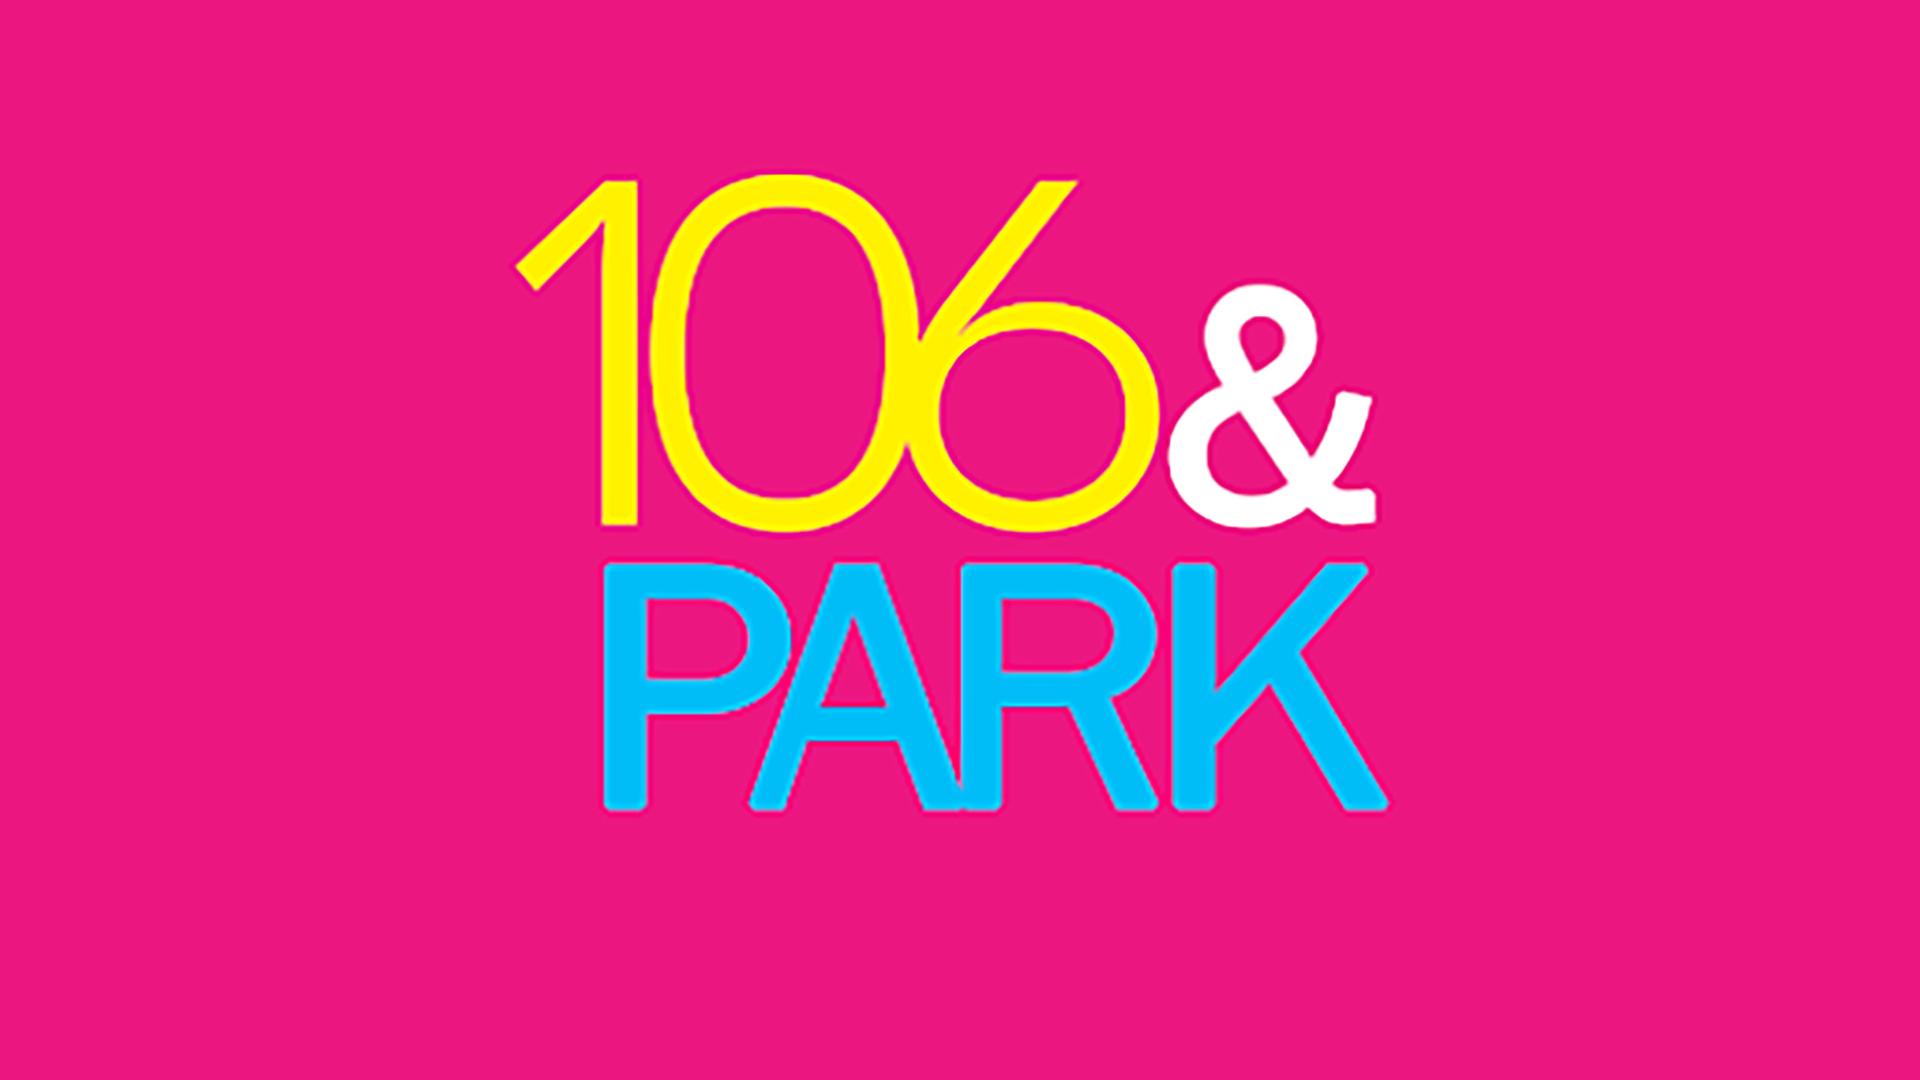 106 & Park